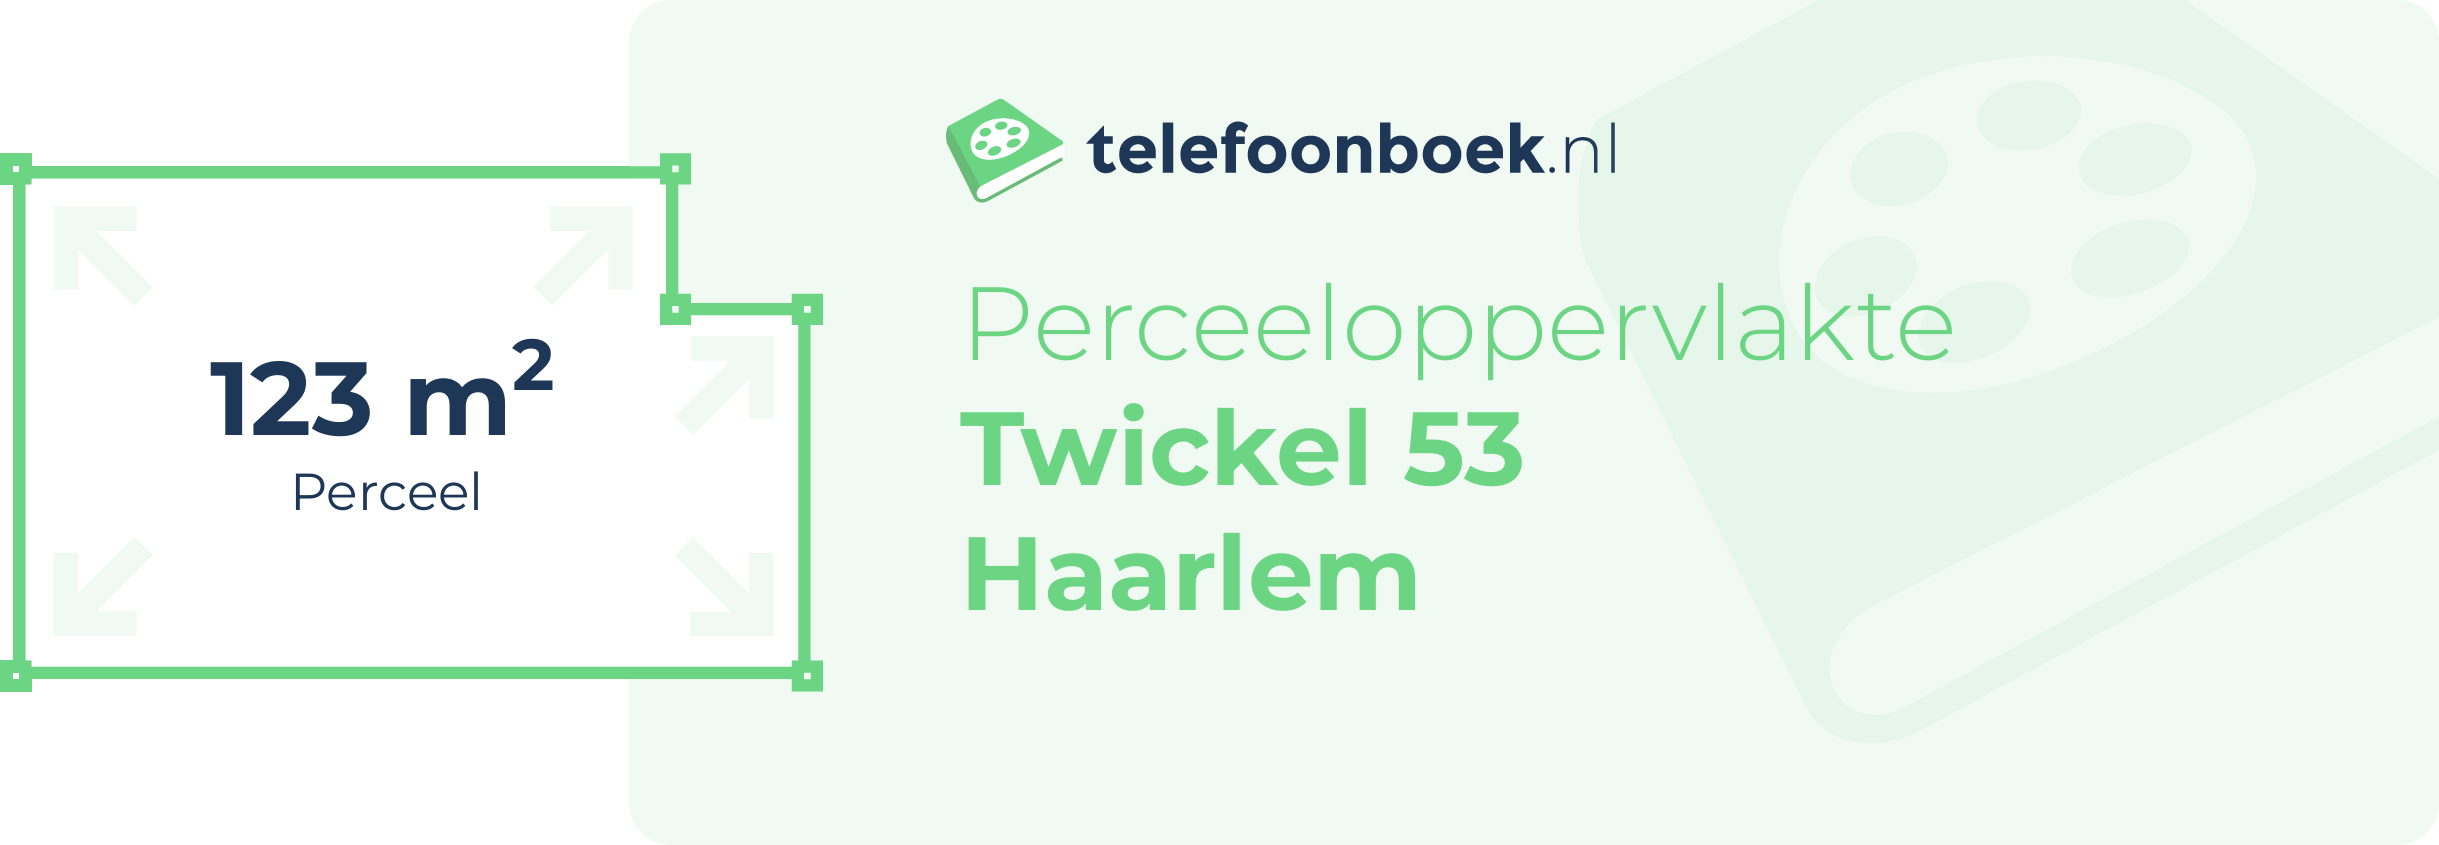 Perceeloppervlakte Twickel 53 Haarlem